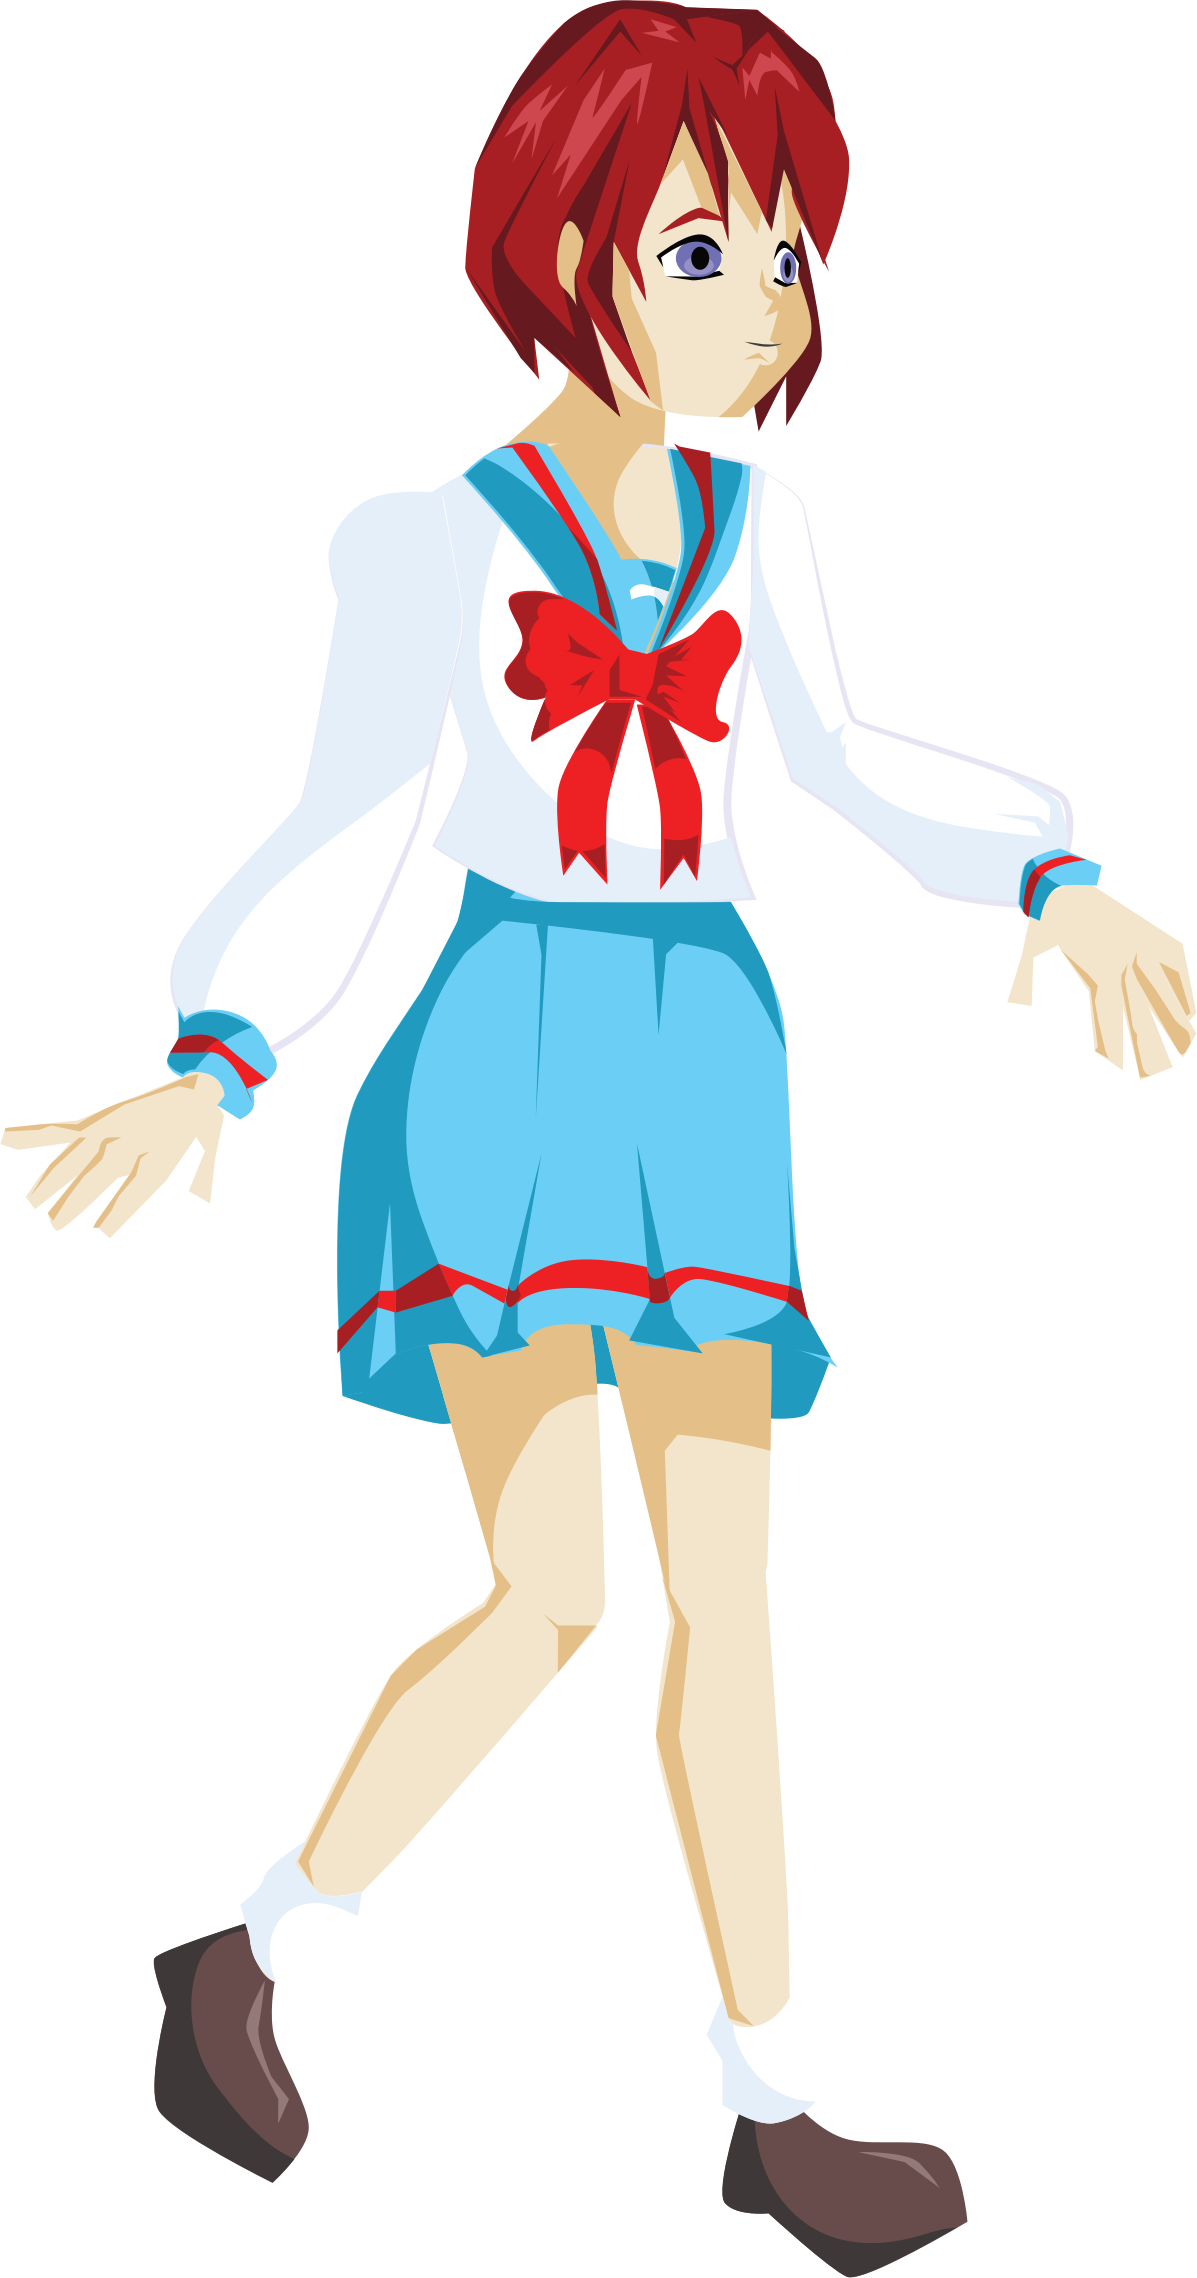 Anime girl big image. Costume clipart school